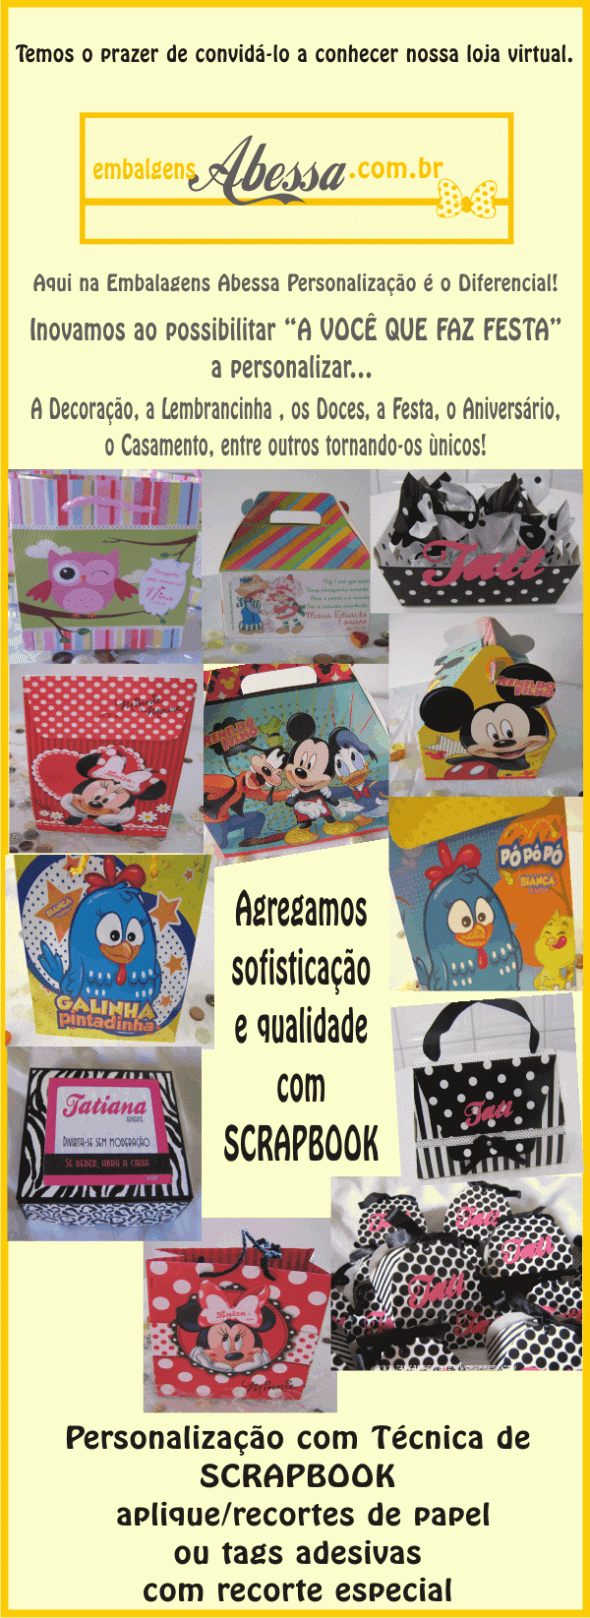 www.embalagensabessa.com.br